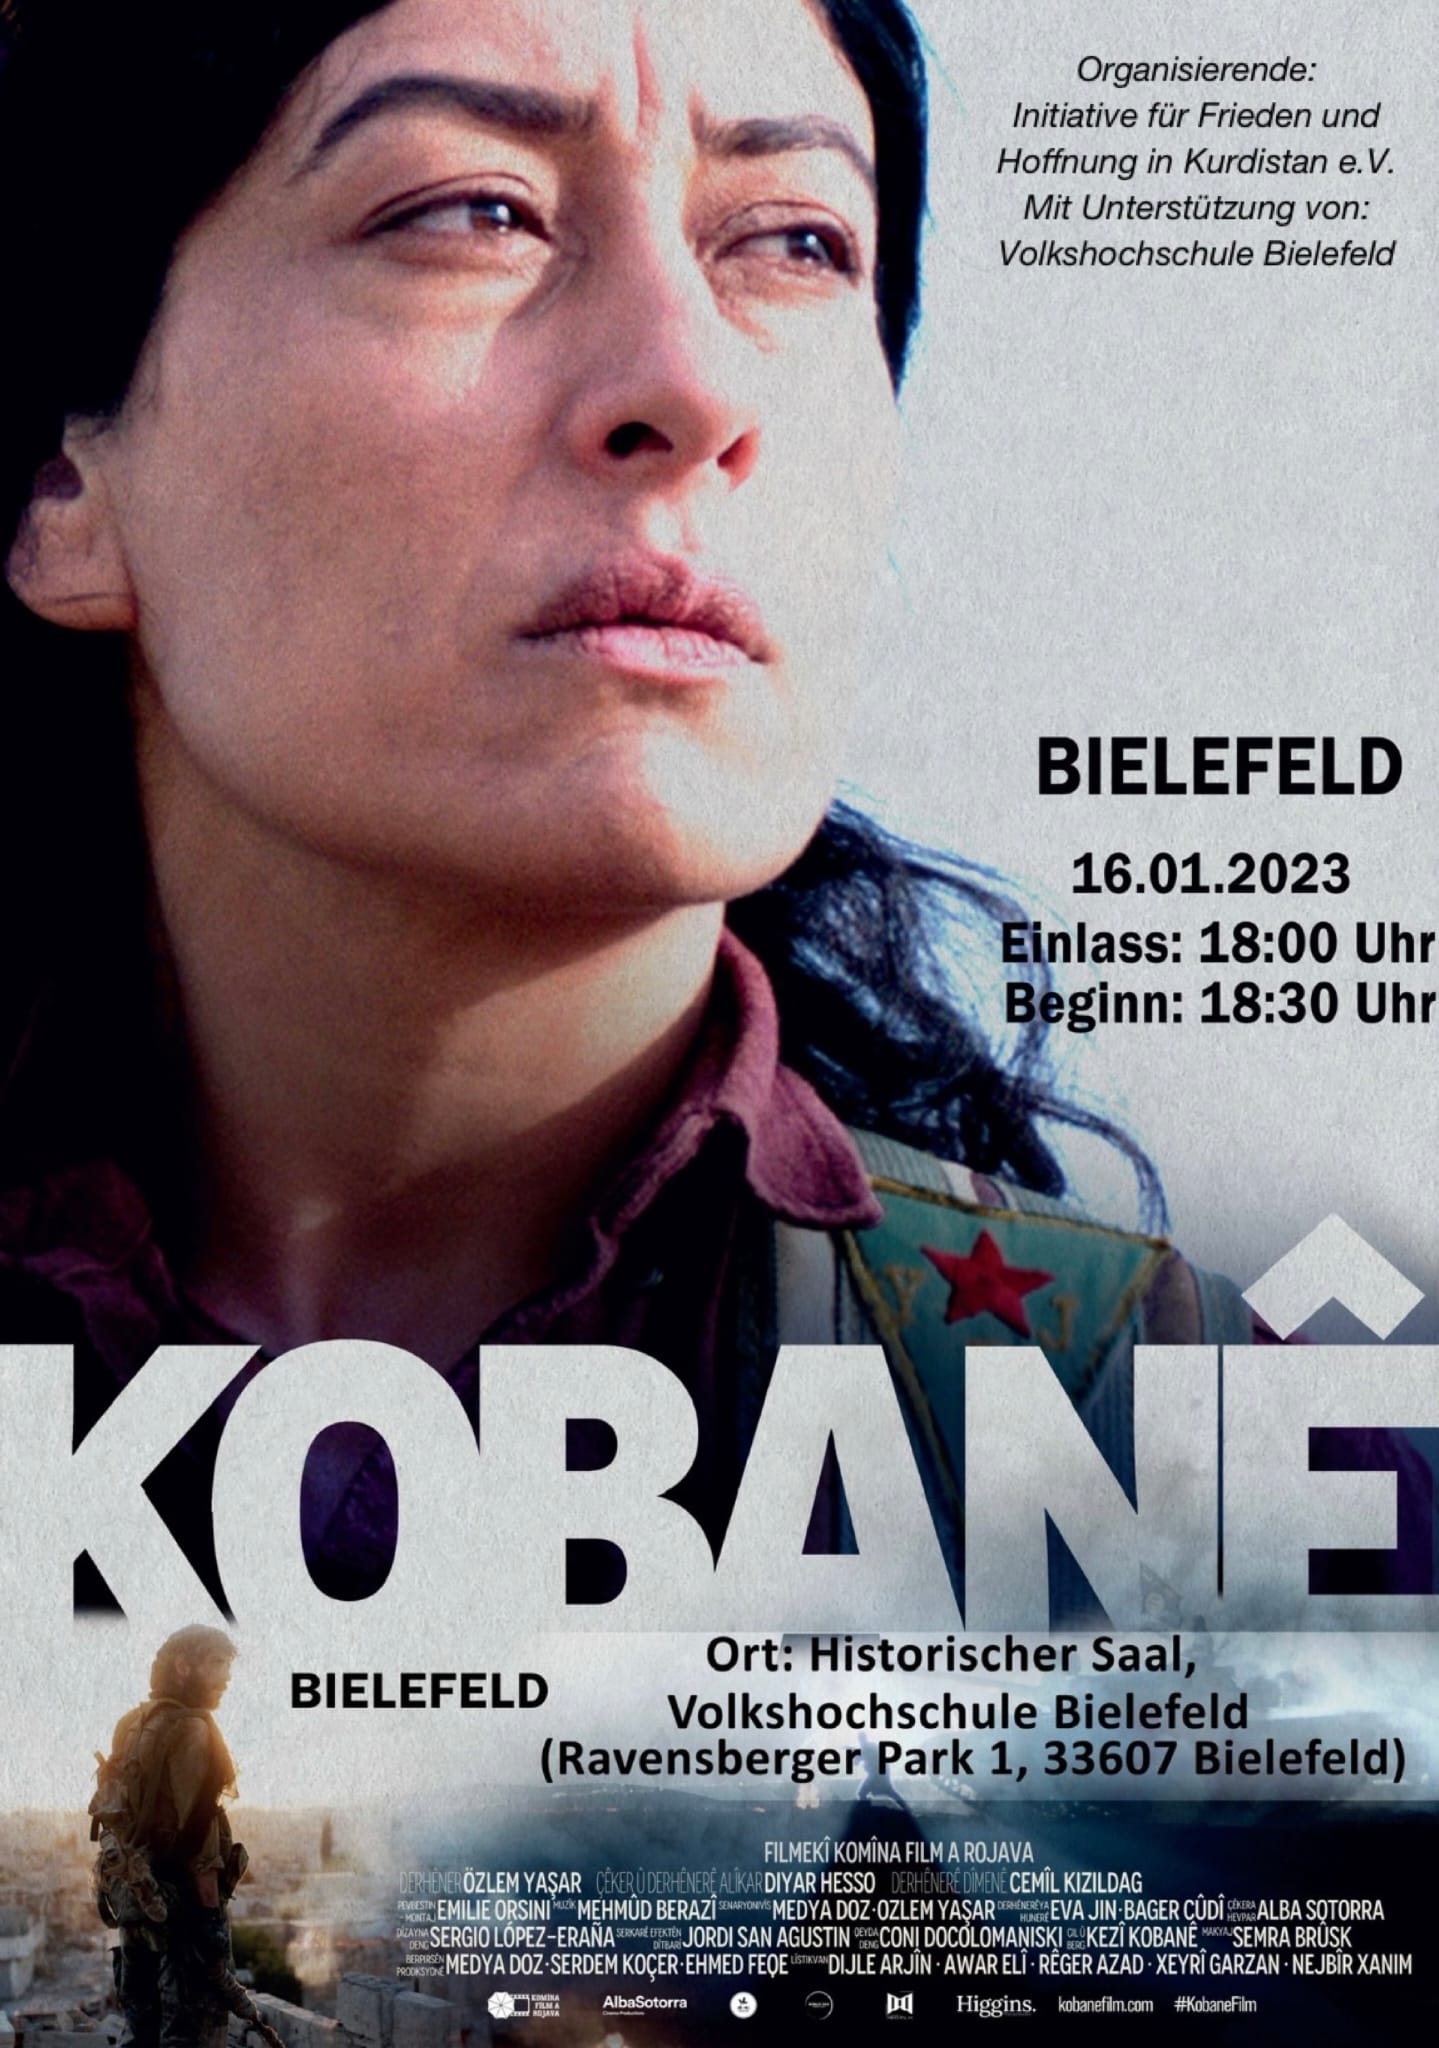 Filmvorführung „Kobanê”, 16. Januar 2023, 18 Uhr, Historischer Saal, Volkshochschule Bielefeld (OmU)